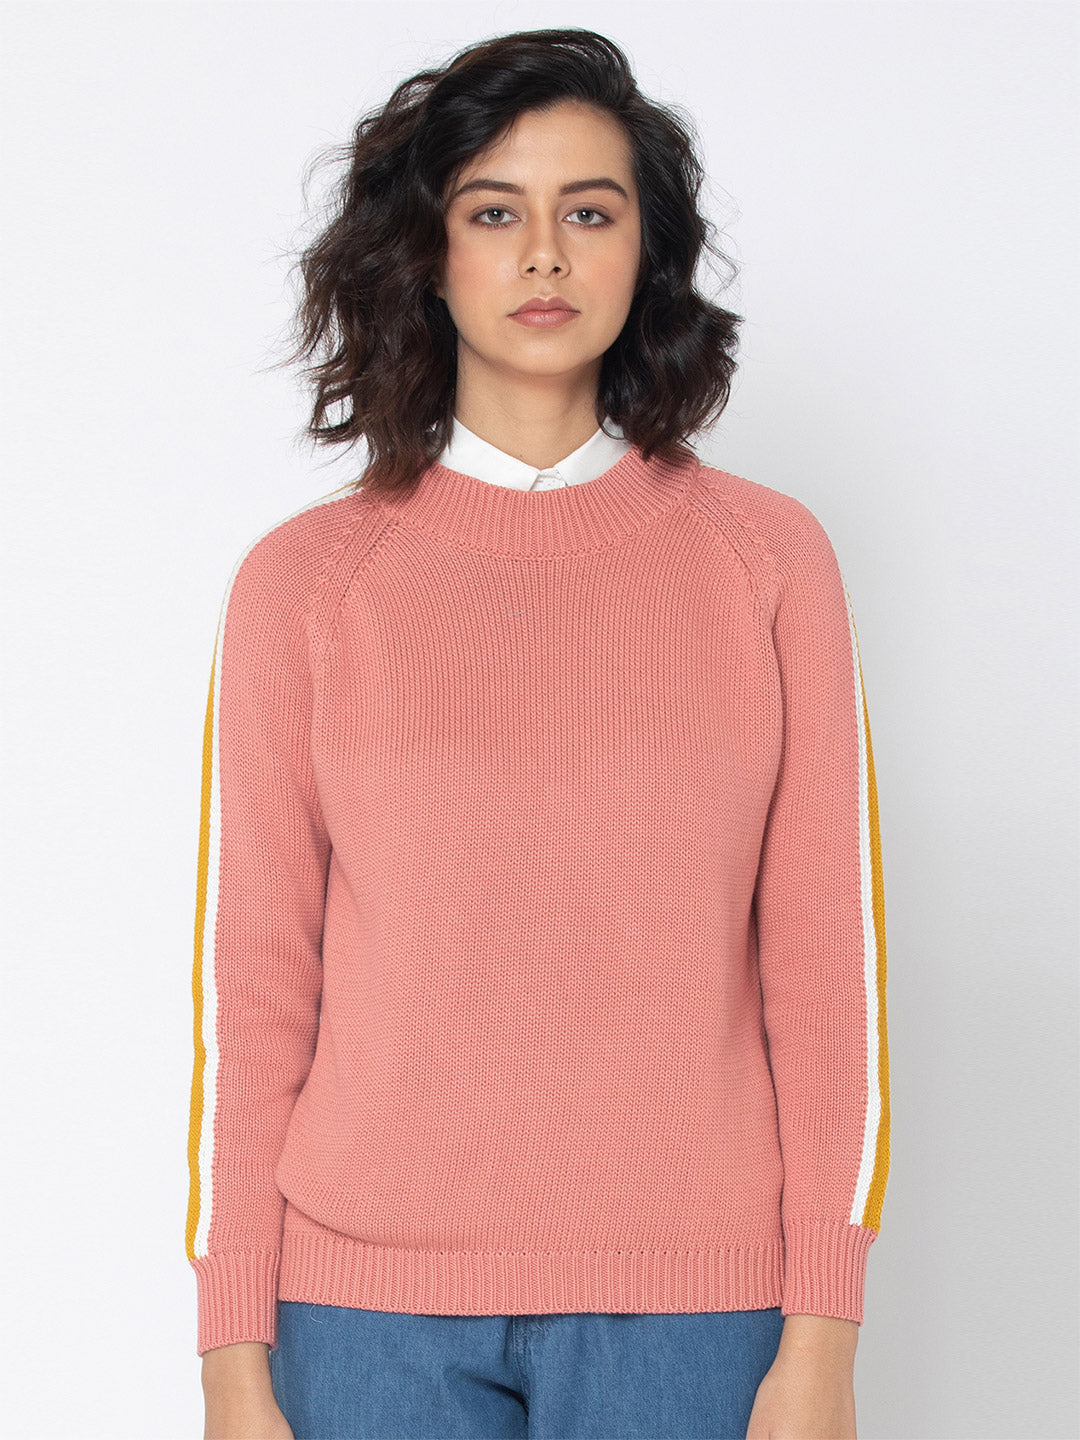 Venus sweater